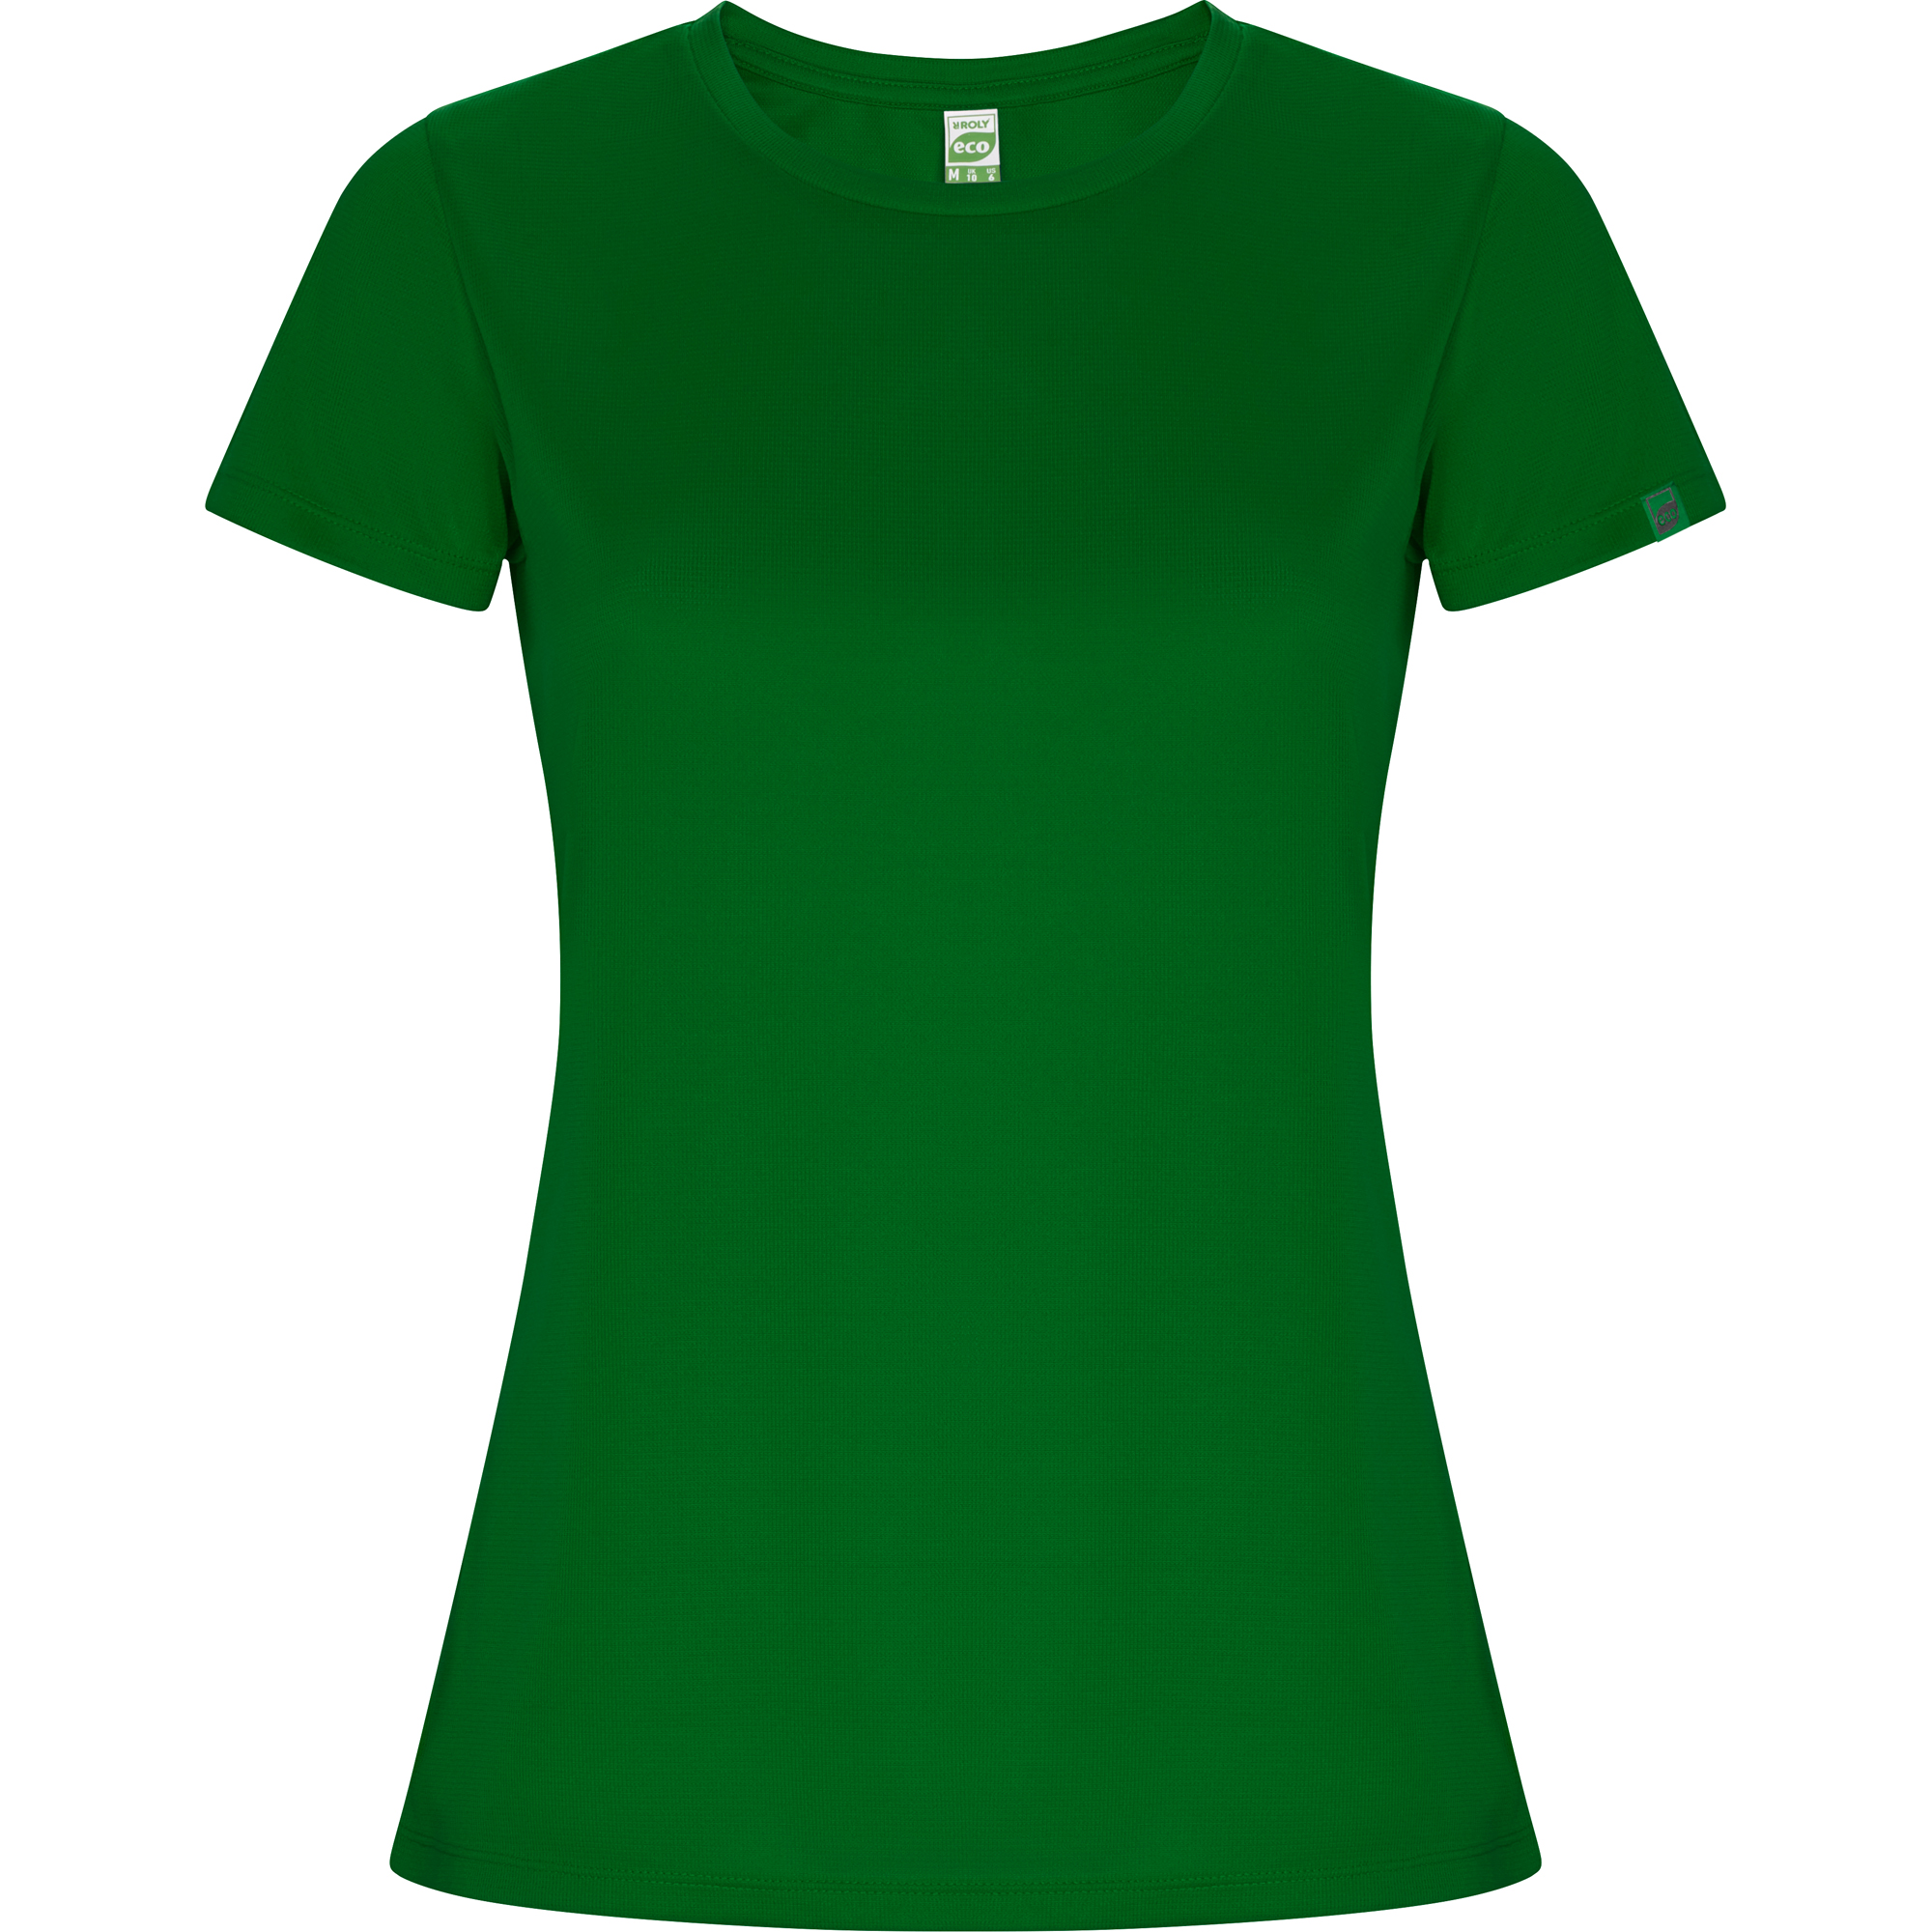 r0428-roly-imola-woman-t-shirt-tecnica-verde-felce.jpg